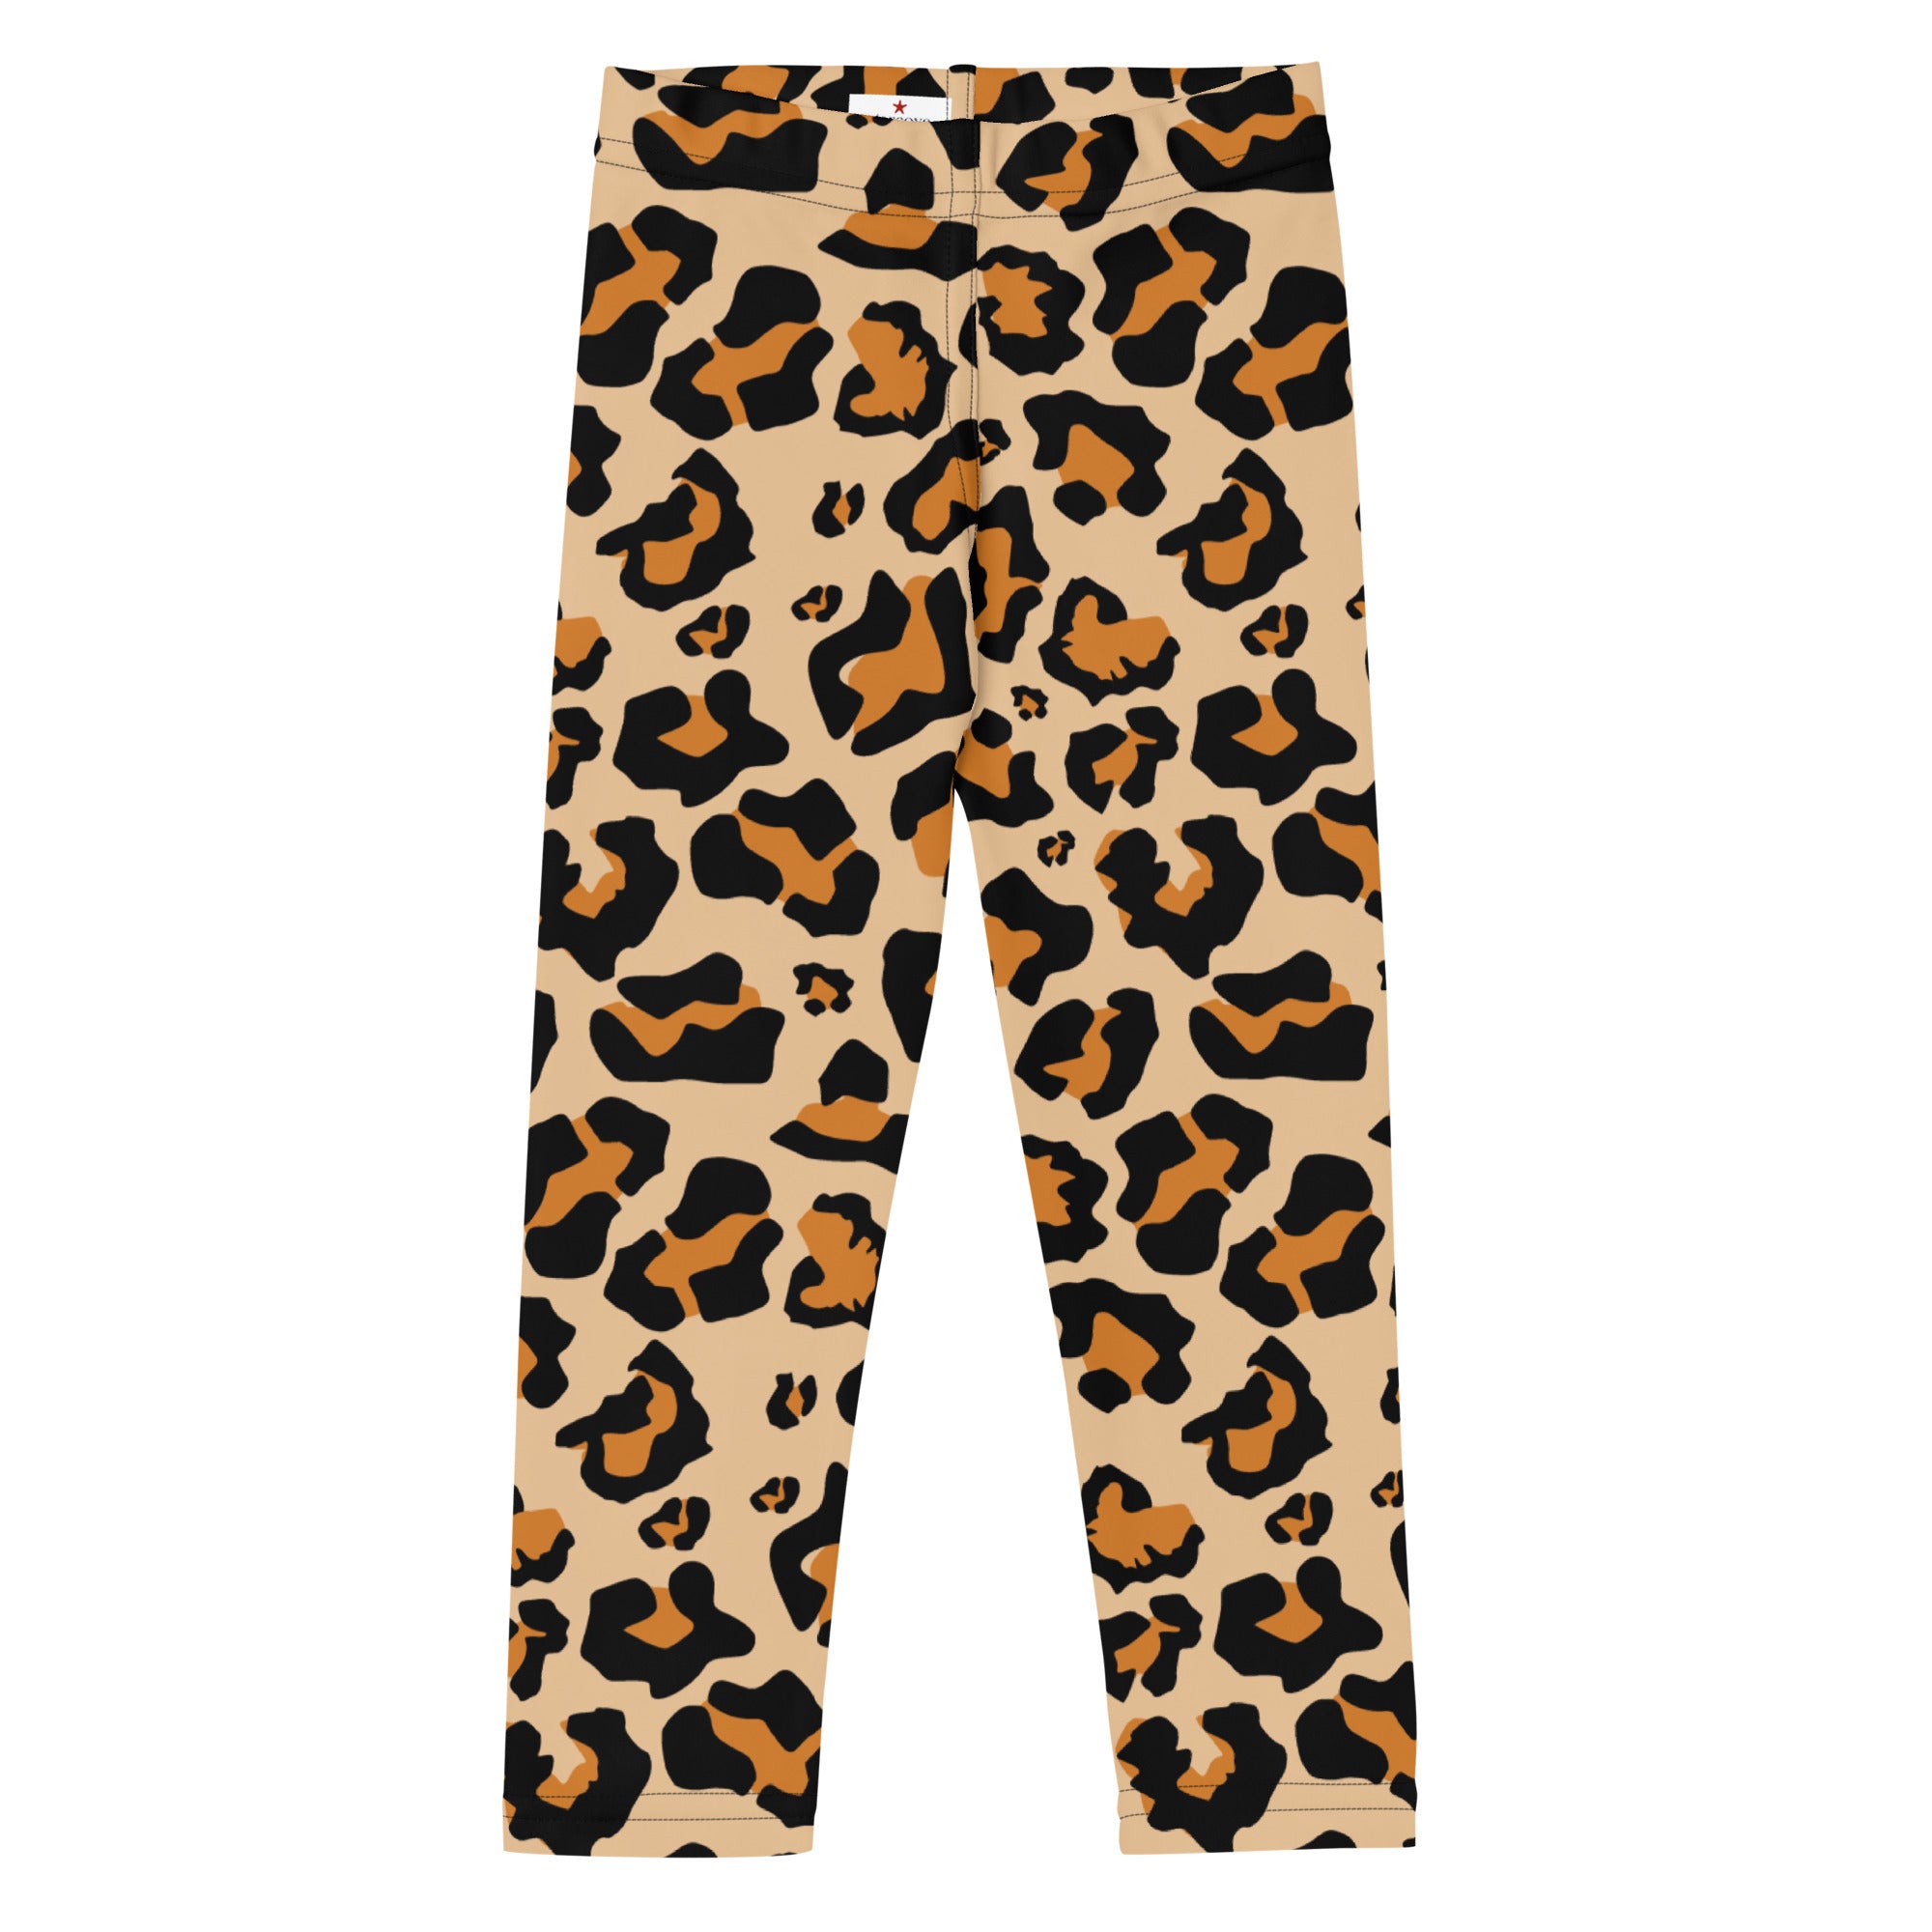 Busha Animal Design Brand New Baby Toddler Boy Girl Leggings Trousers Pants  USA | eBay